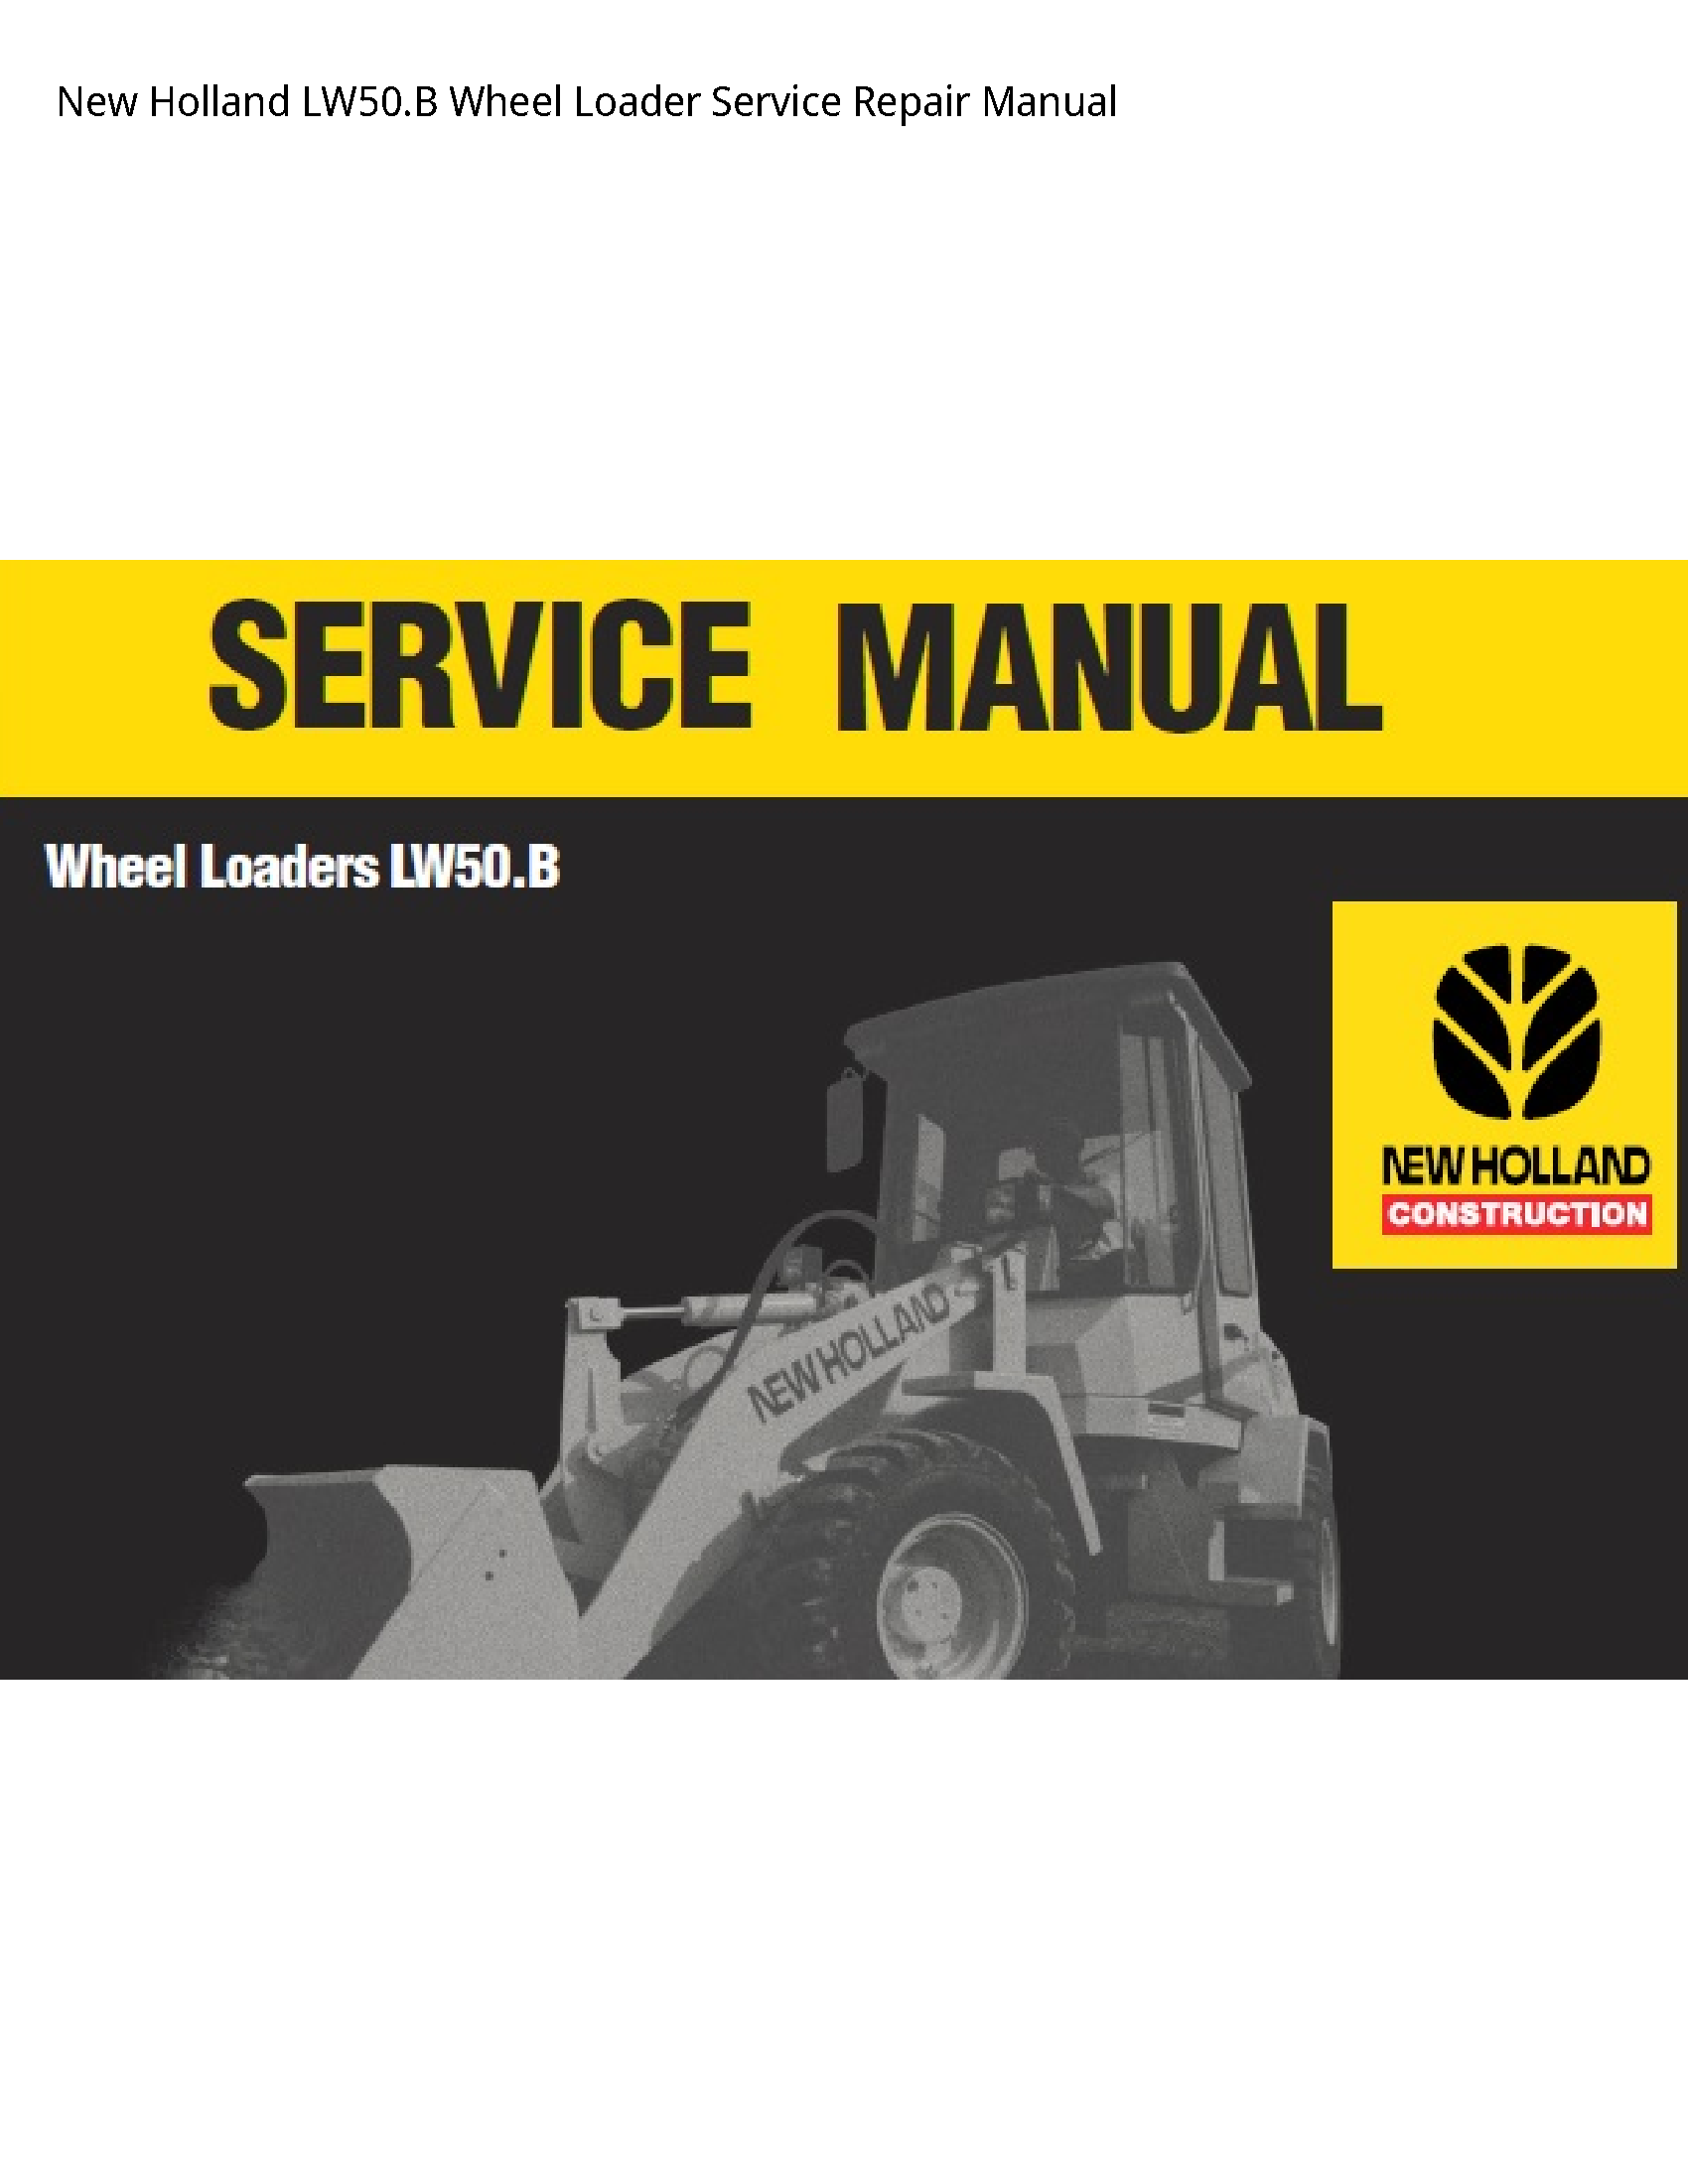 New Holland LW50.B Wheel Loader manual